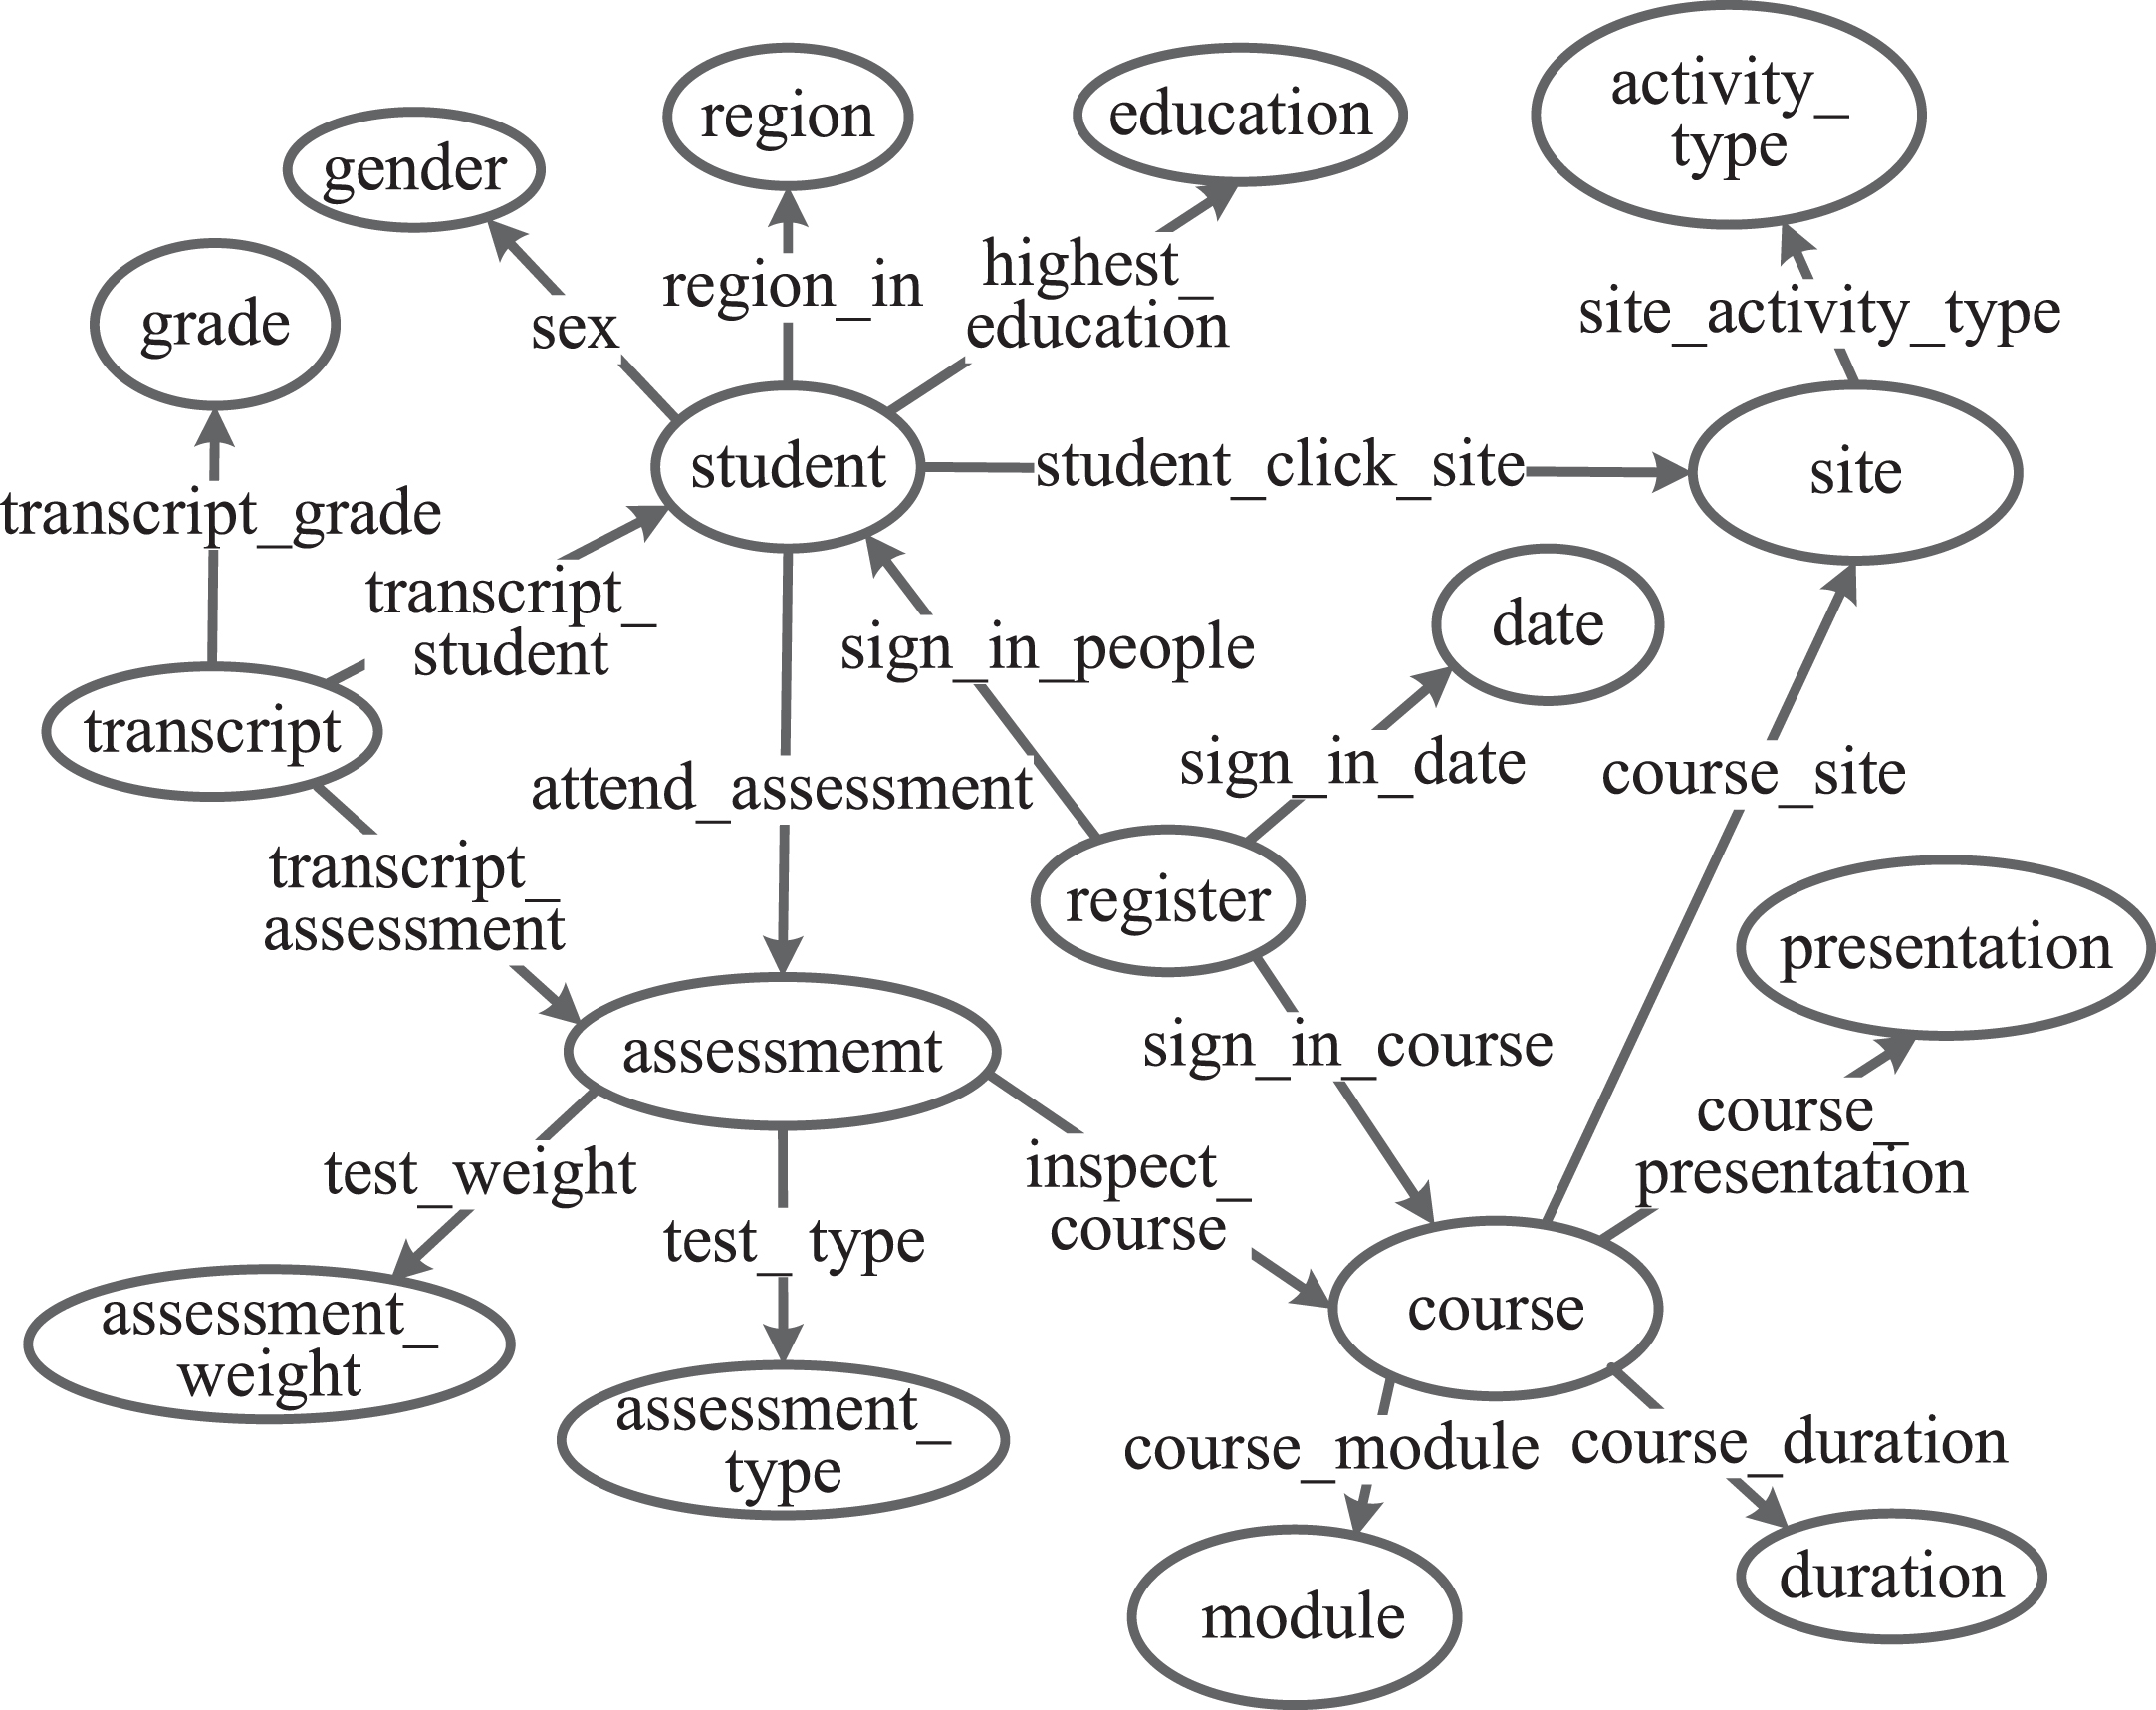 Ontology model of online learning environment.